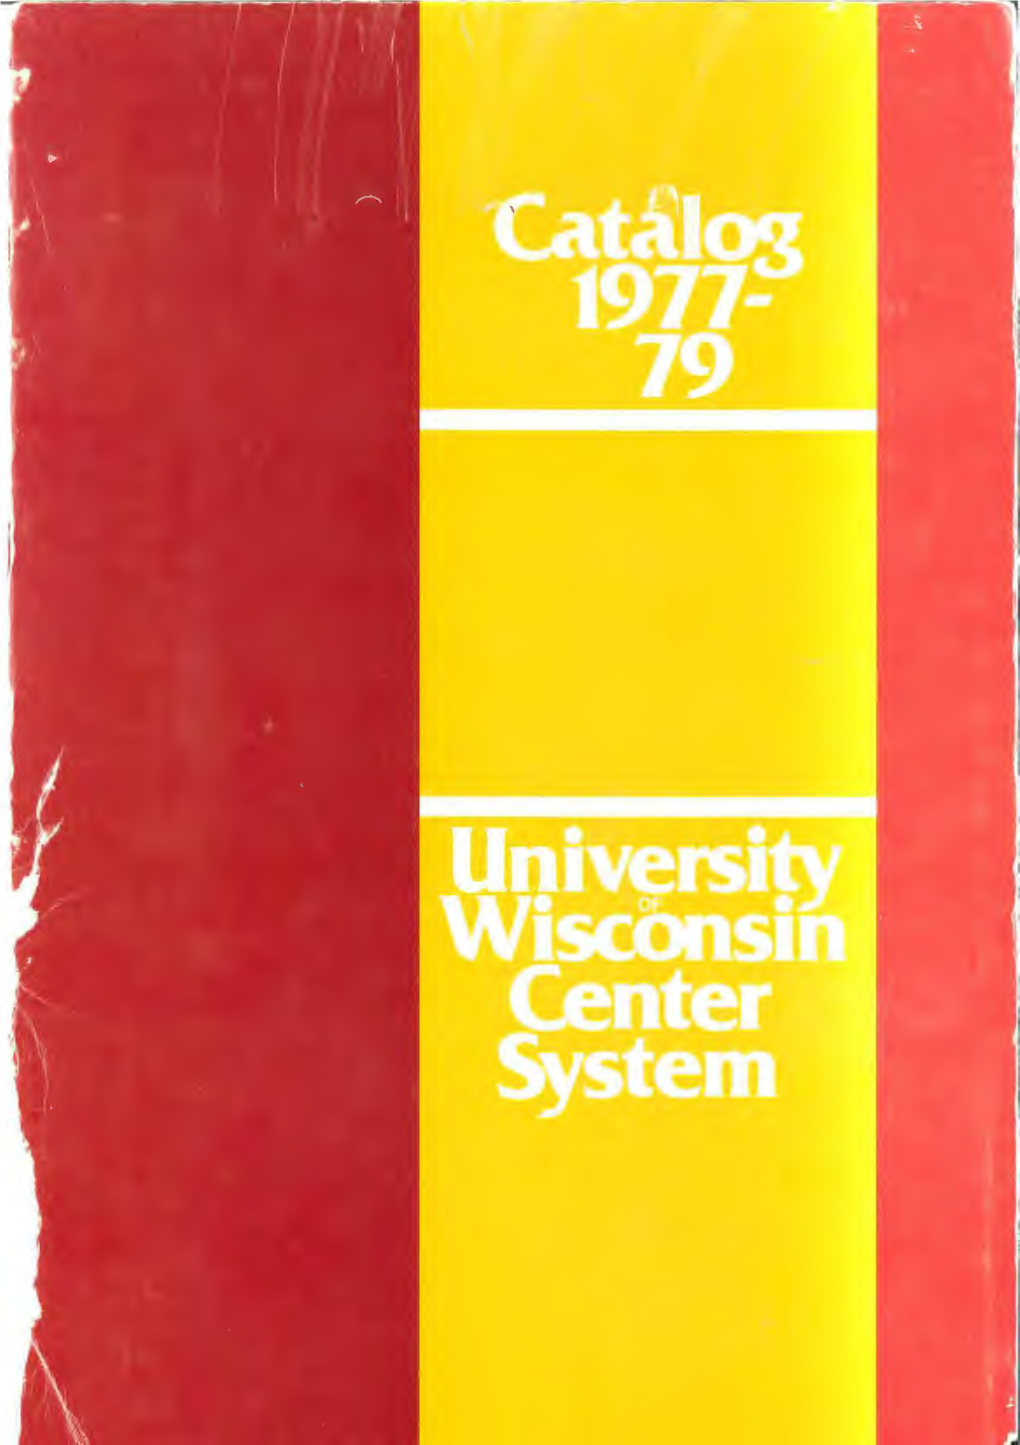 1977-1979 Colleges Course Catalog.Pdf